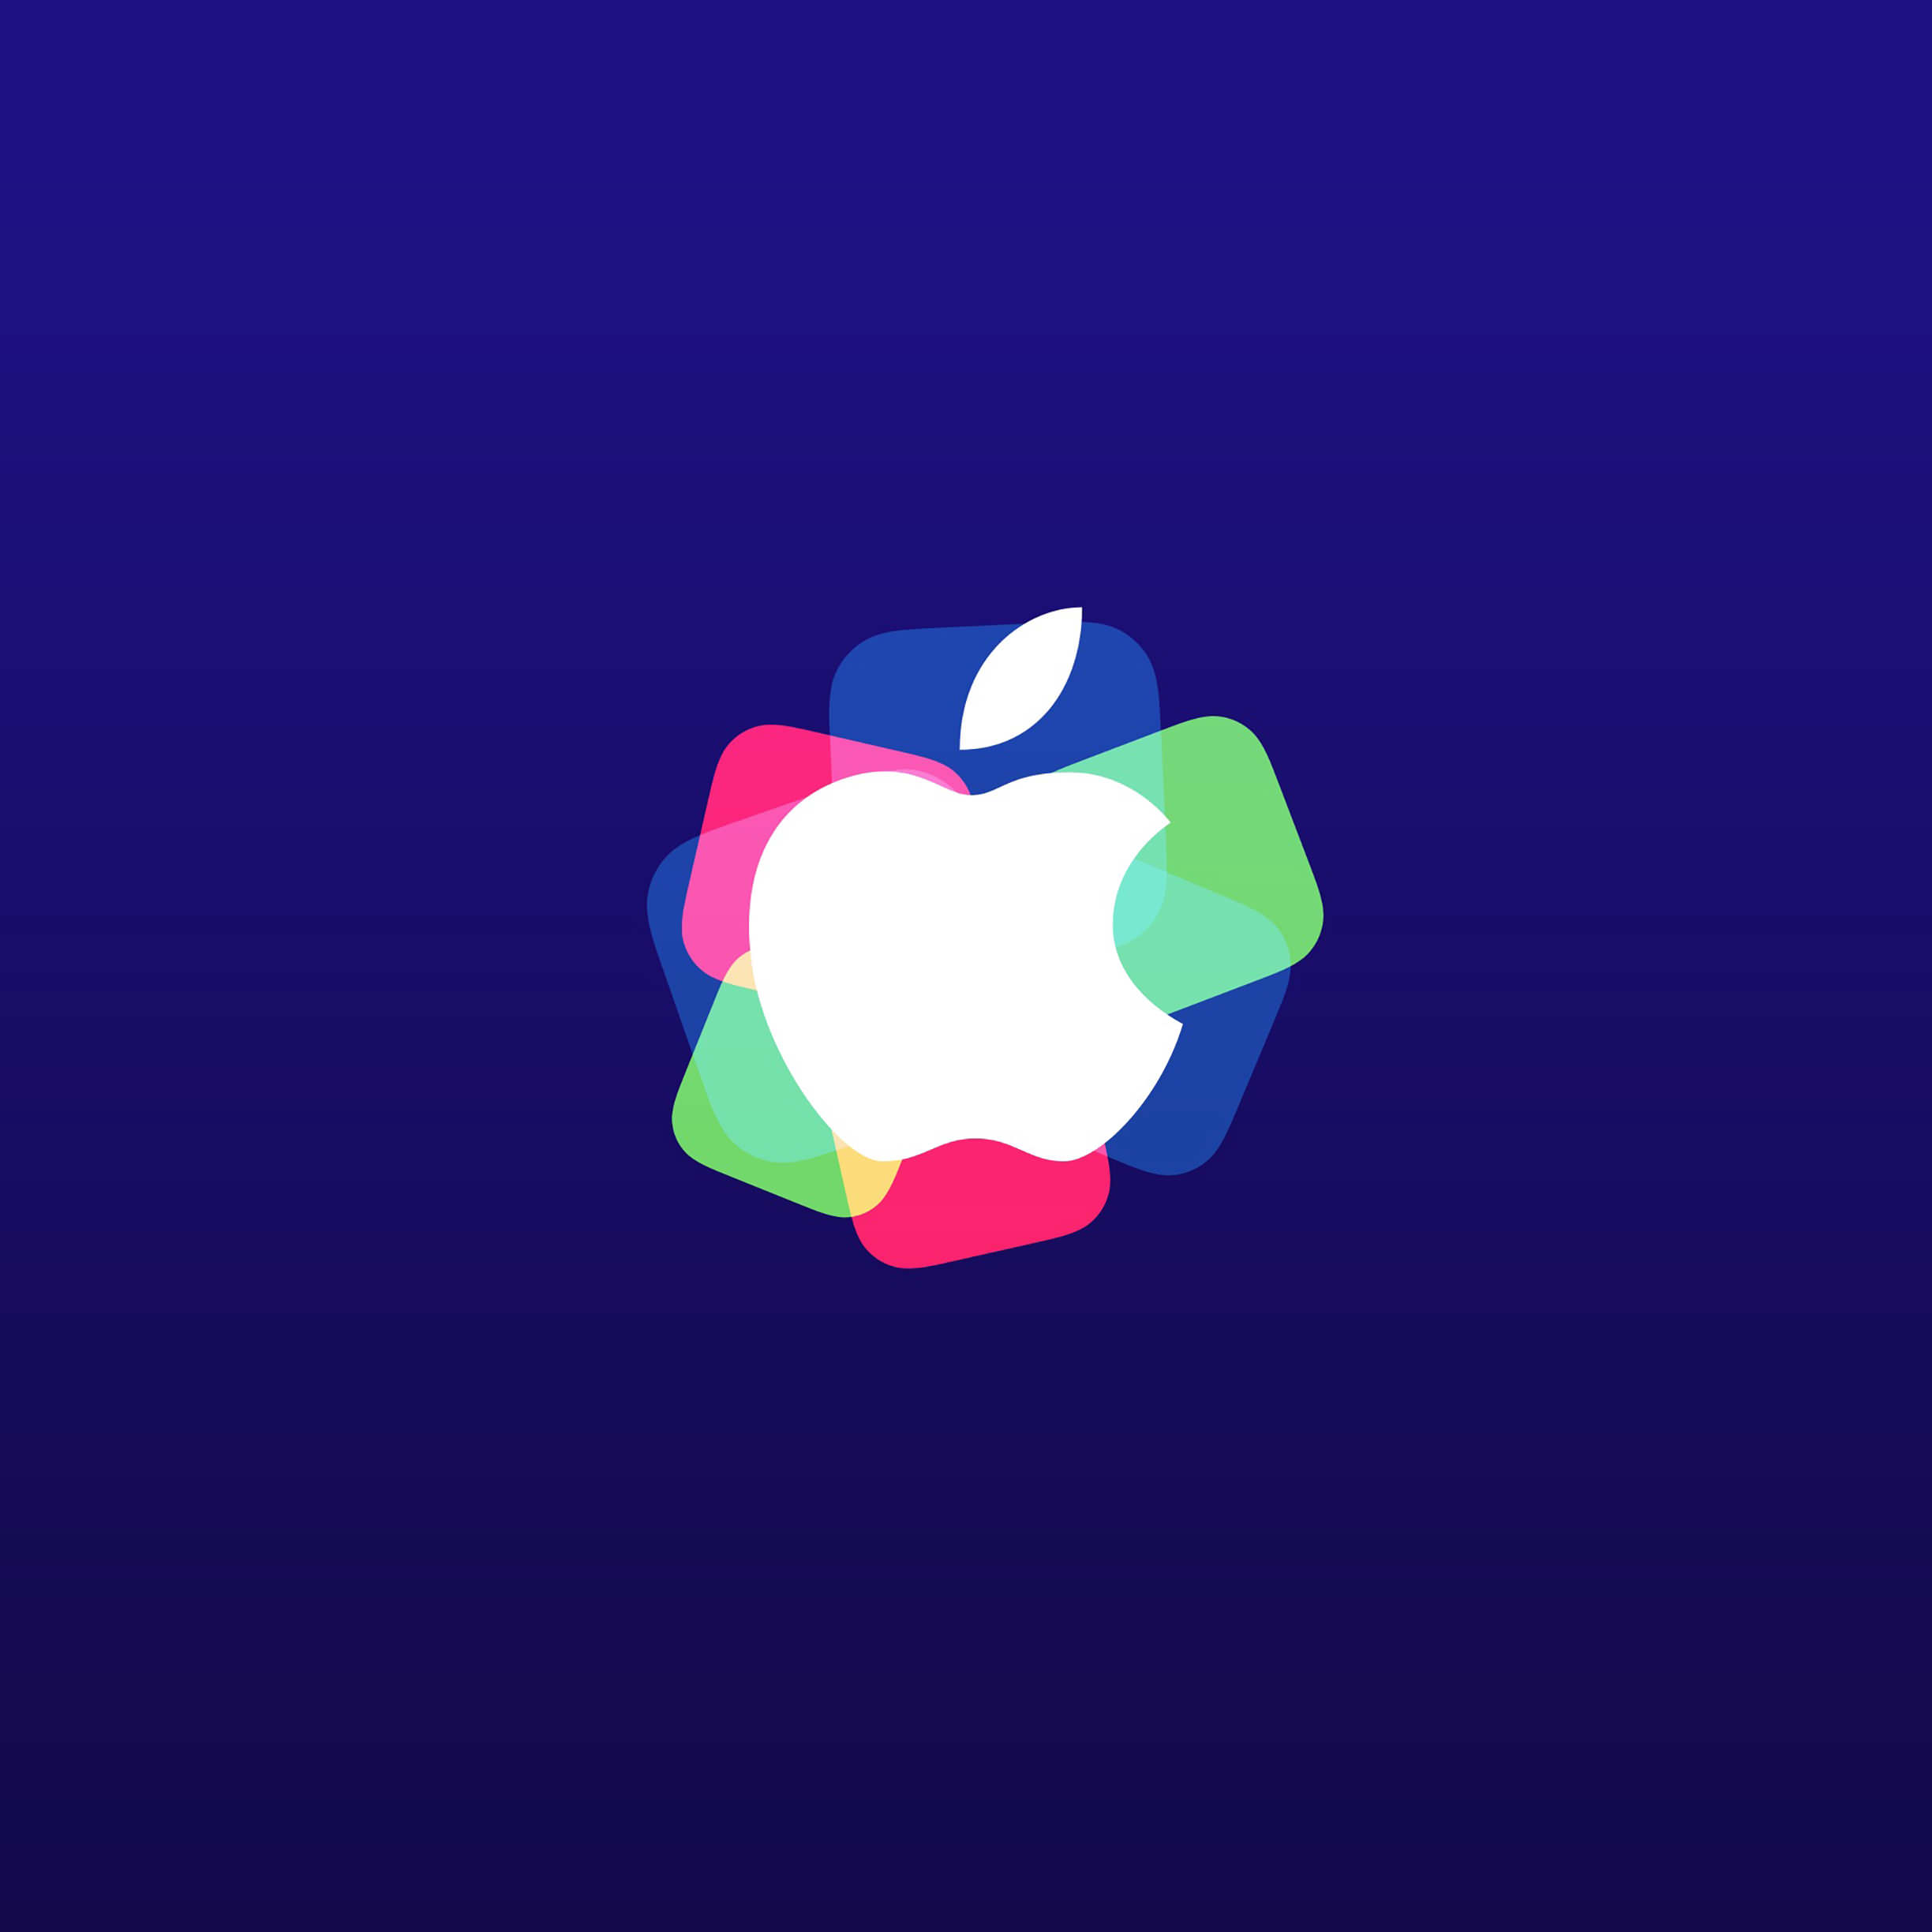 Apple logo event purple | wallpaper.sc iPad